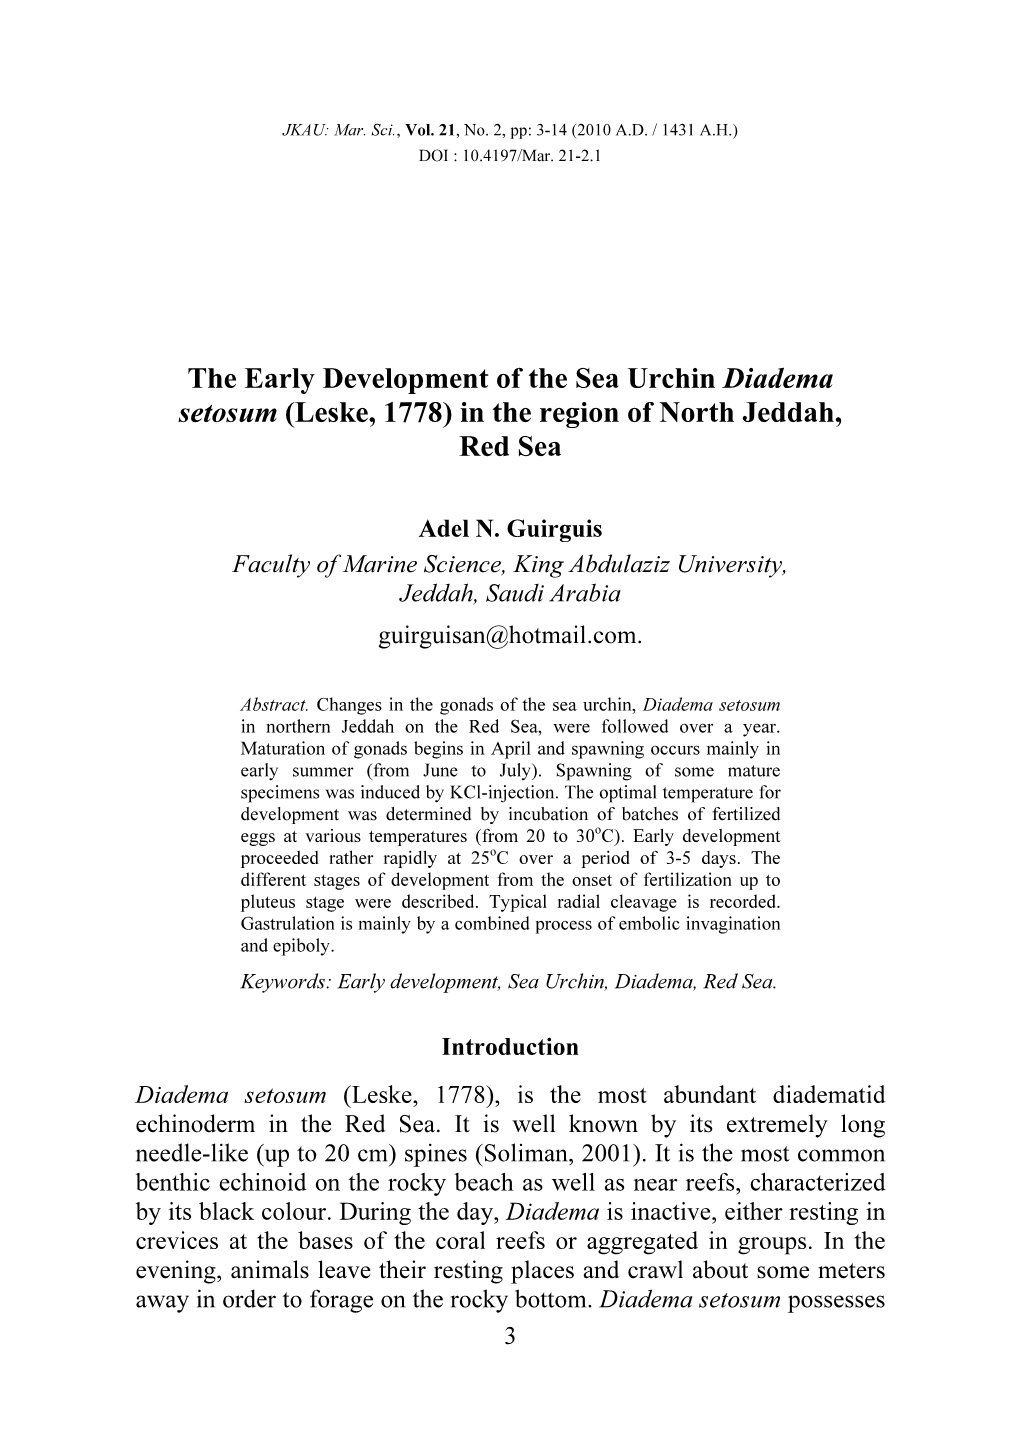 The Early Development of the Sea Urchin Diadema Setosum (Leske, 1778) in the Region of North Jeddah, Red Sea